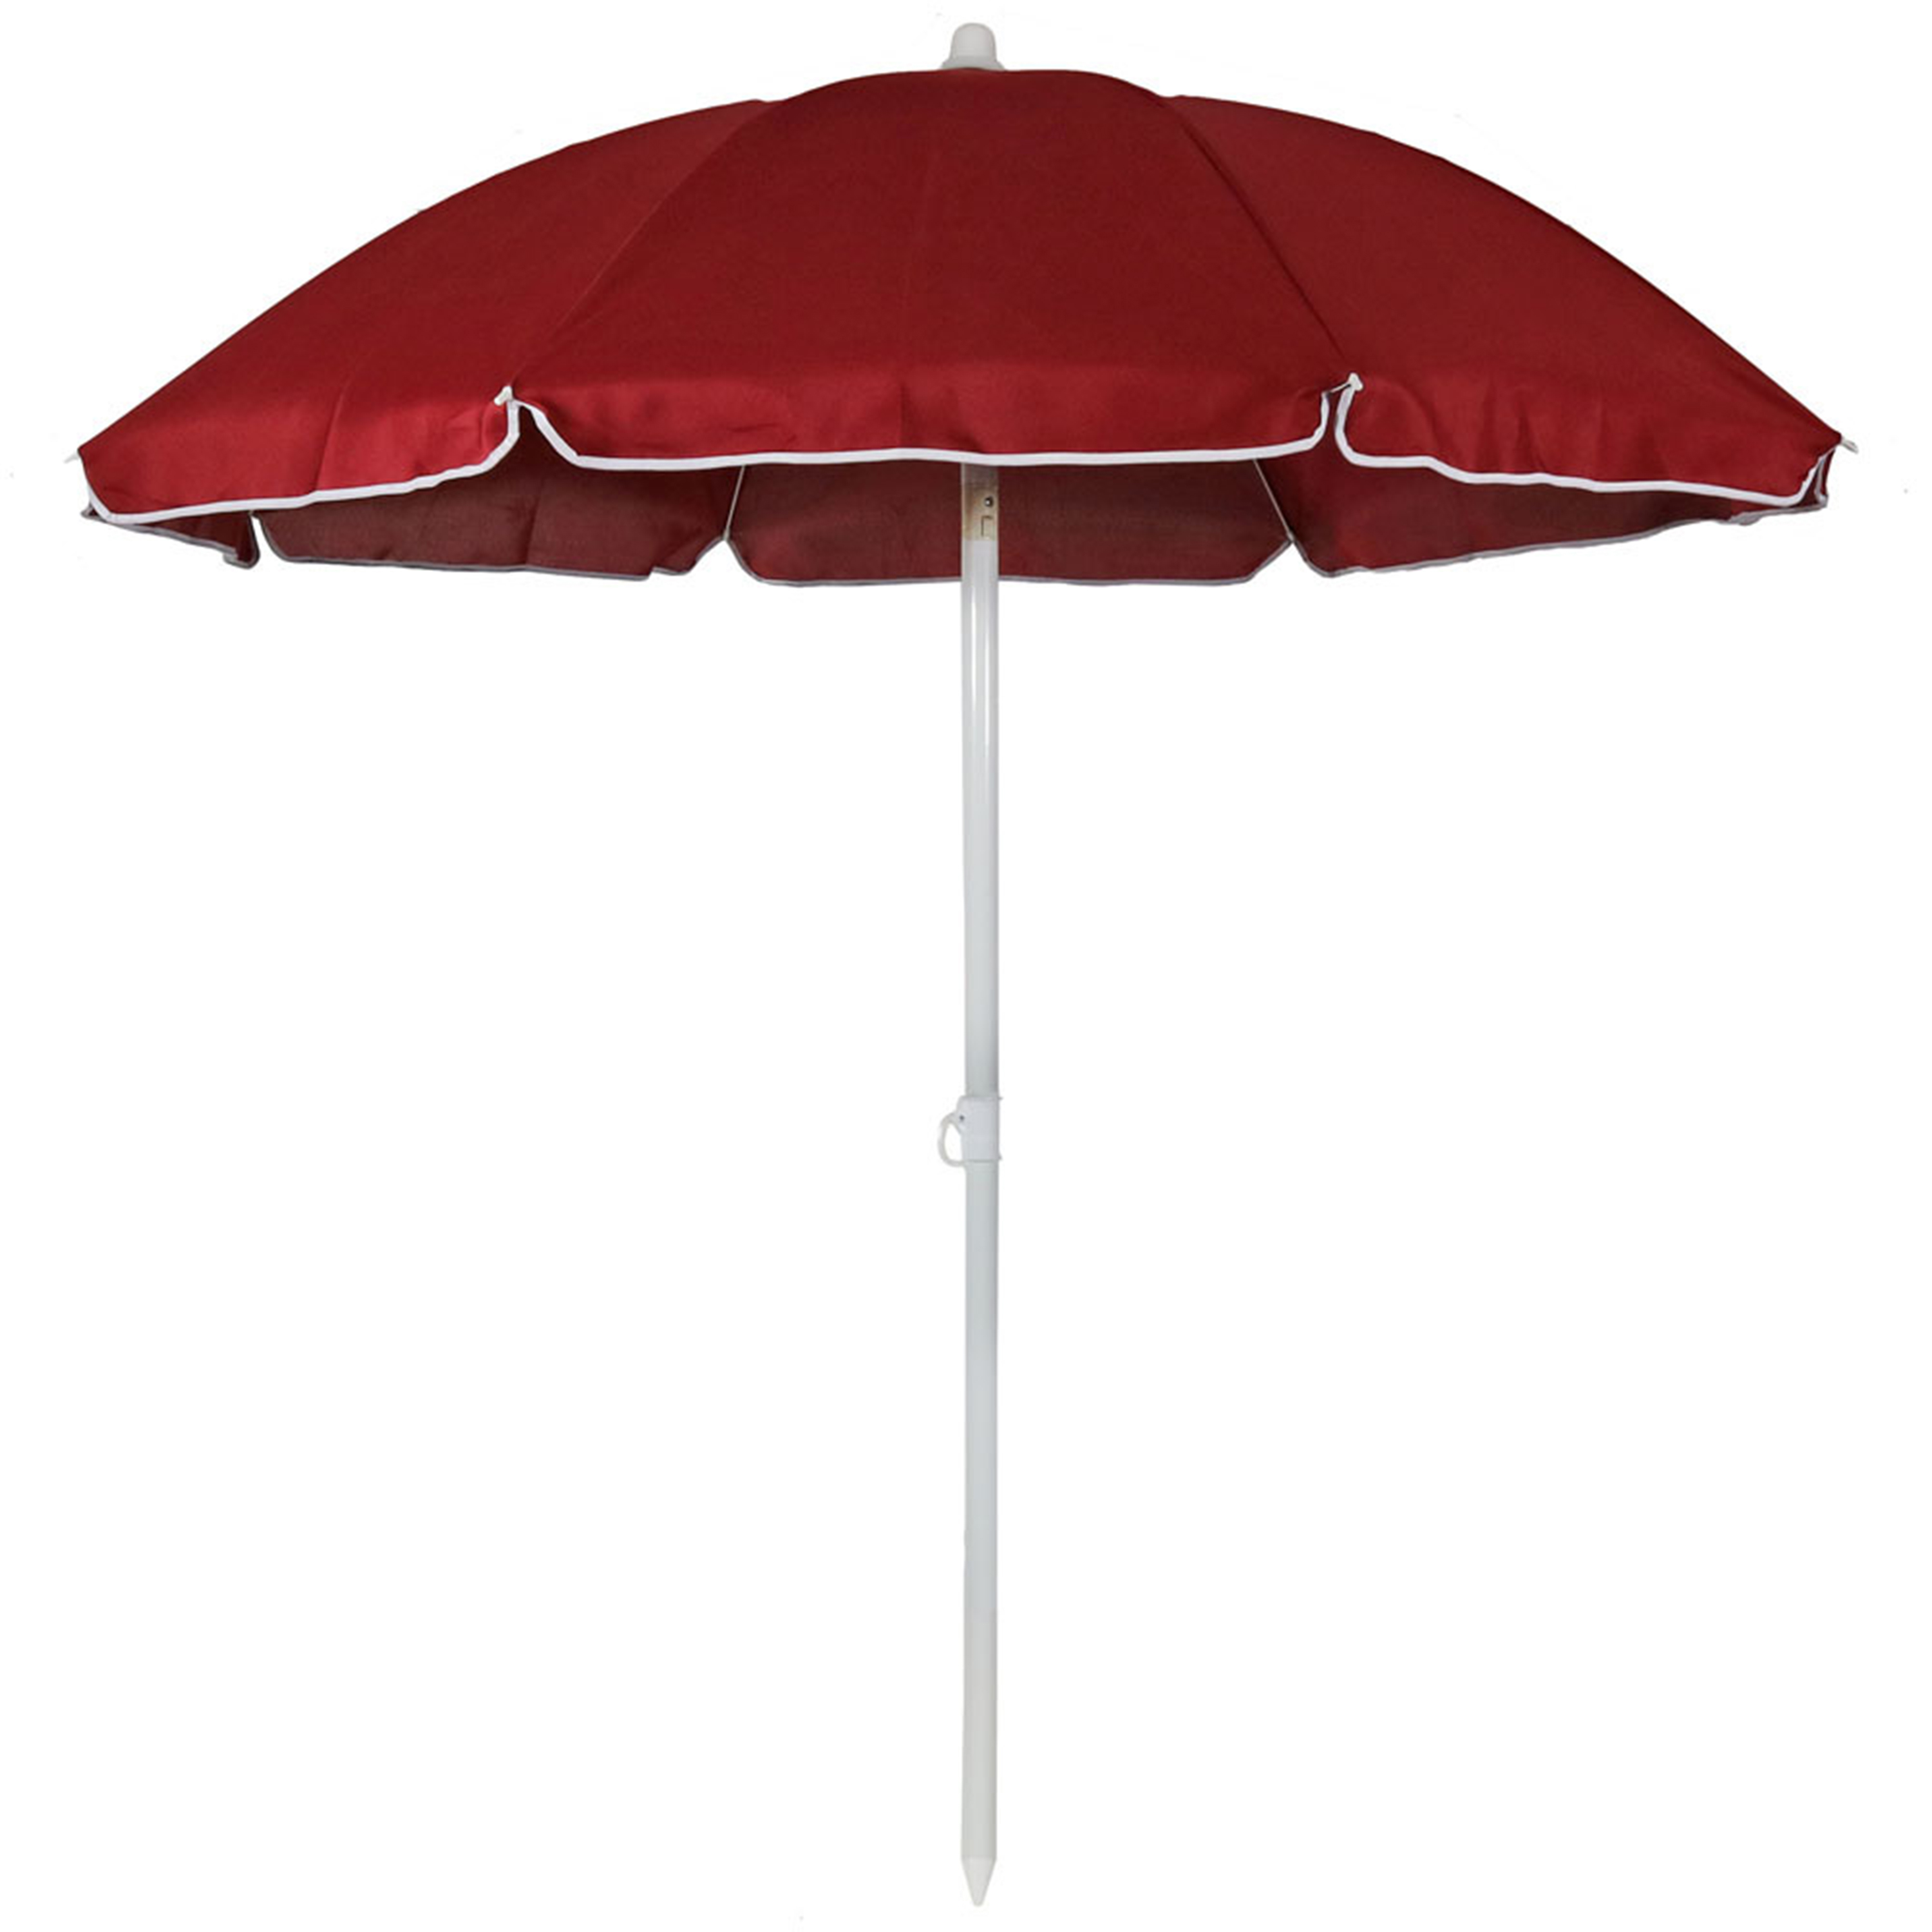 Sunnydaze Steel 5 Foot Beach Umbrella with Tilt Function, Red